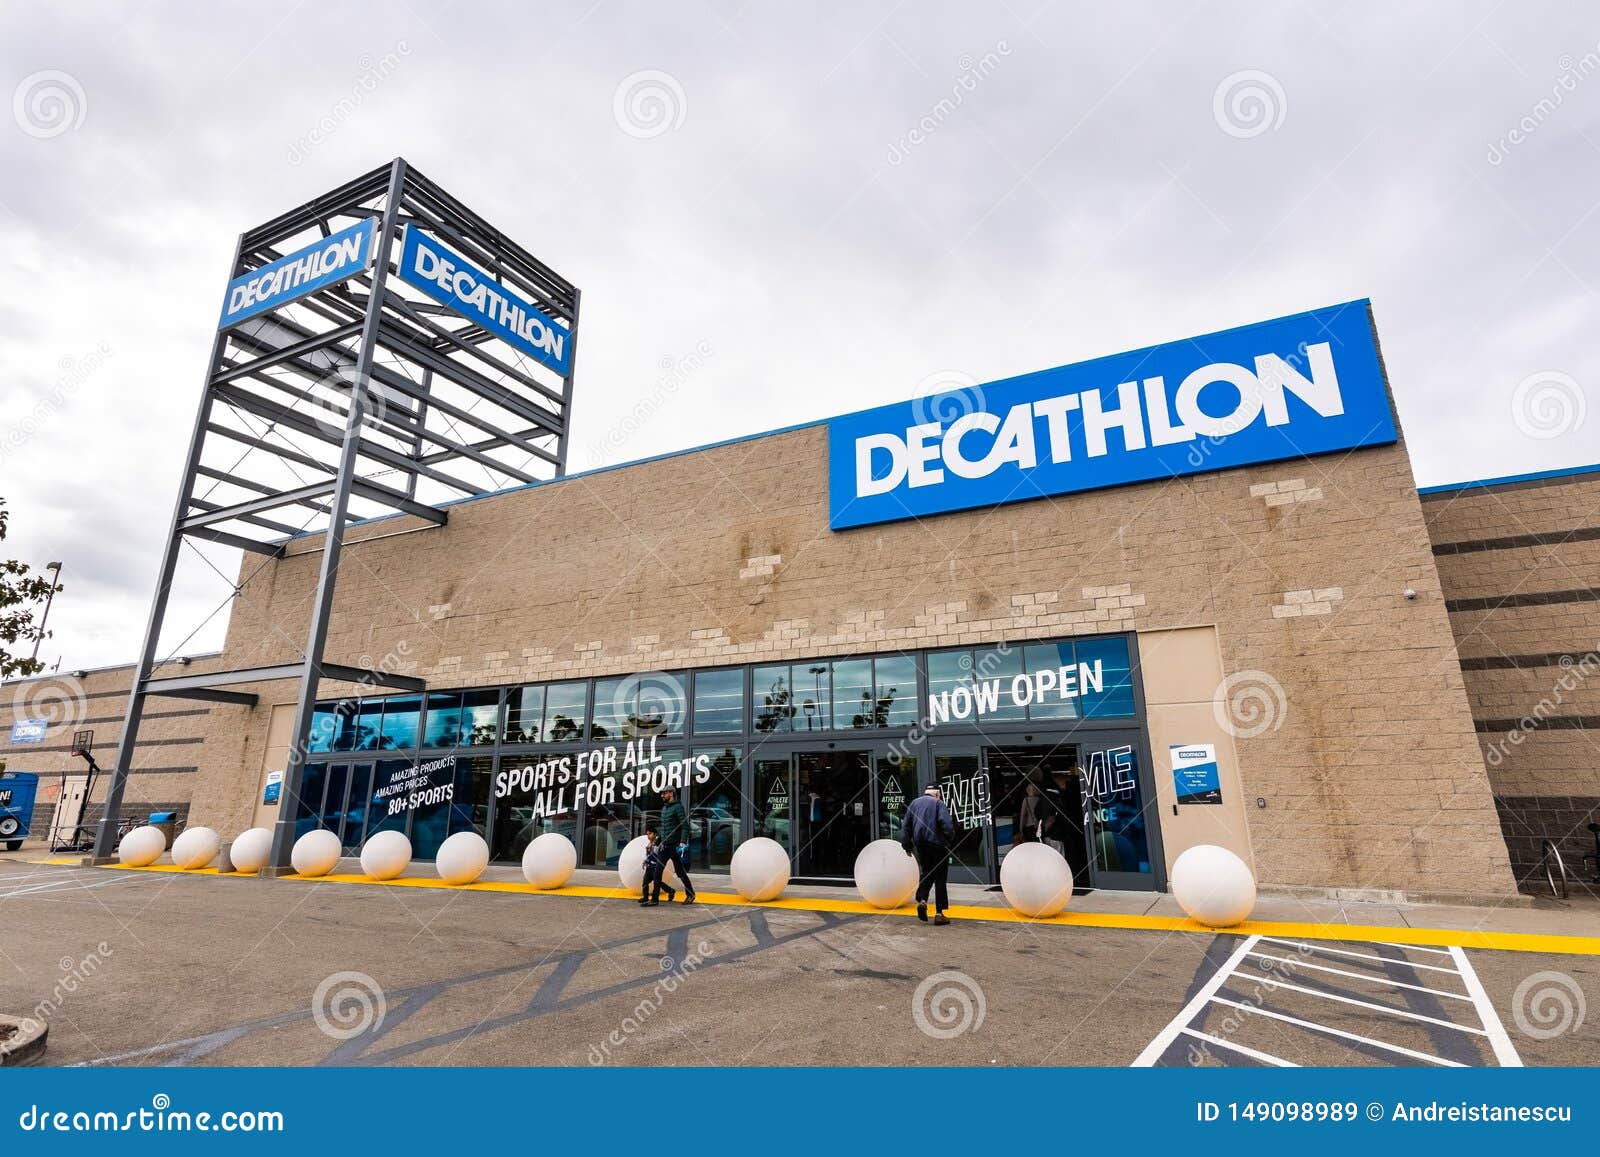 decathlon stores in usa